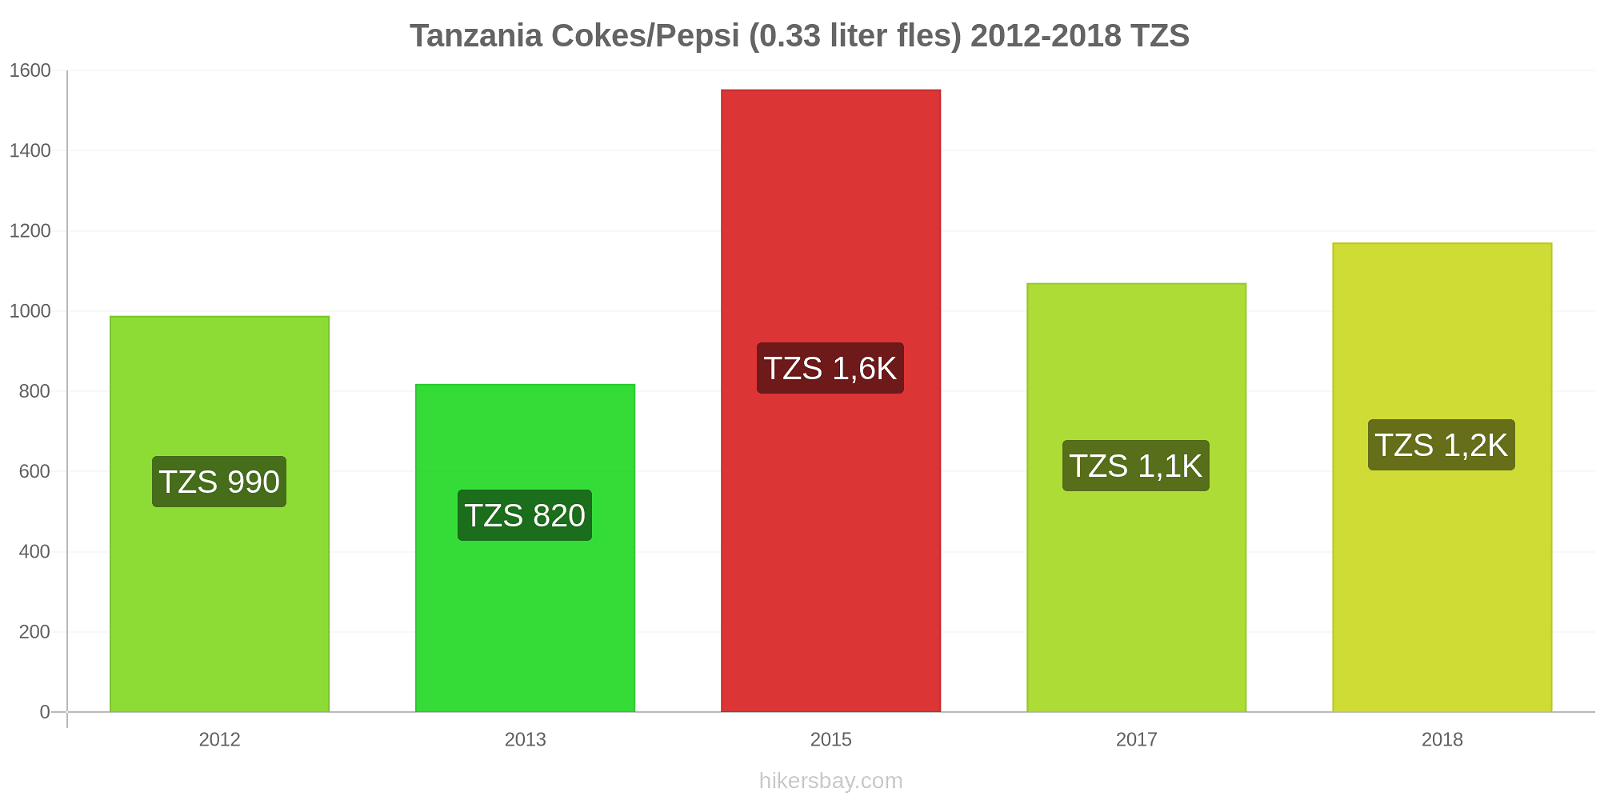 Tanzania prijswijzigingen Coca-Cola/Pepsi (0.33 liter fles) hikersbay.com